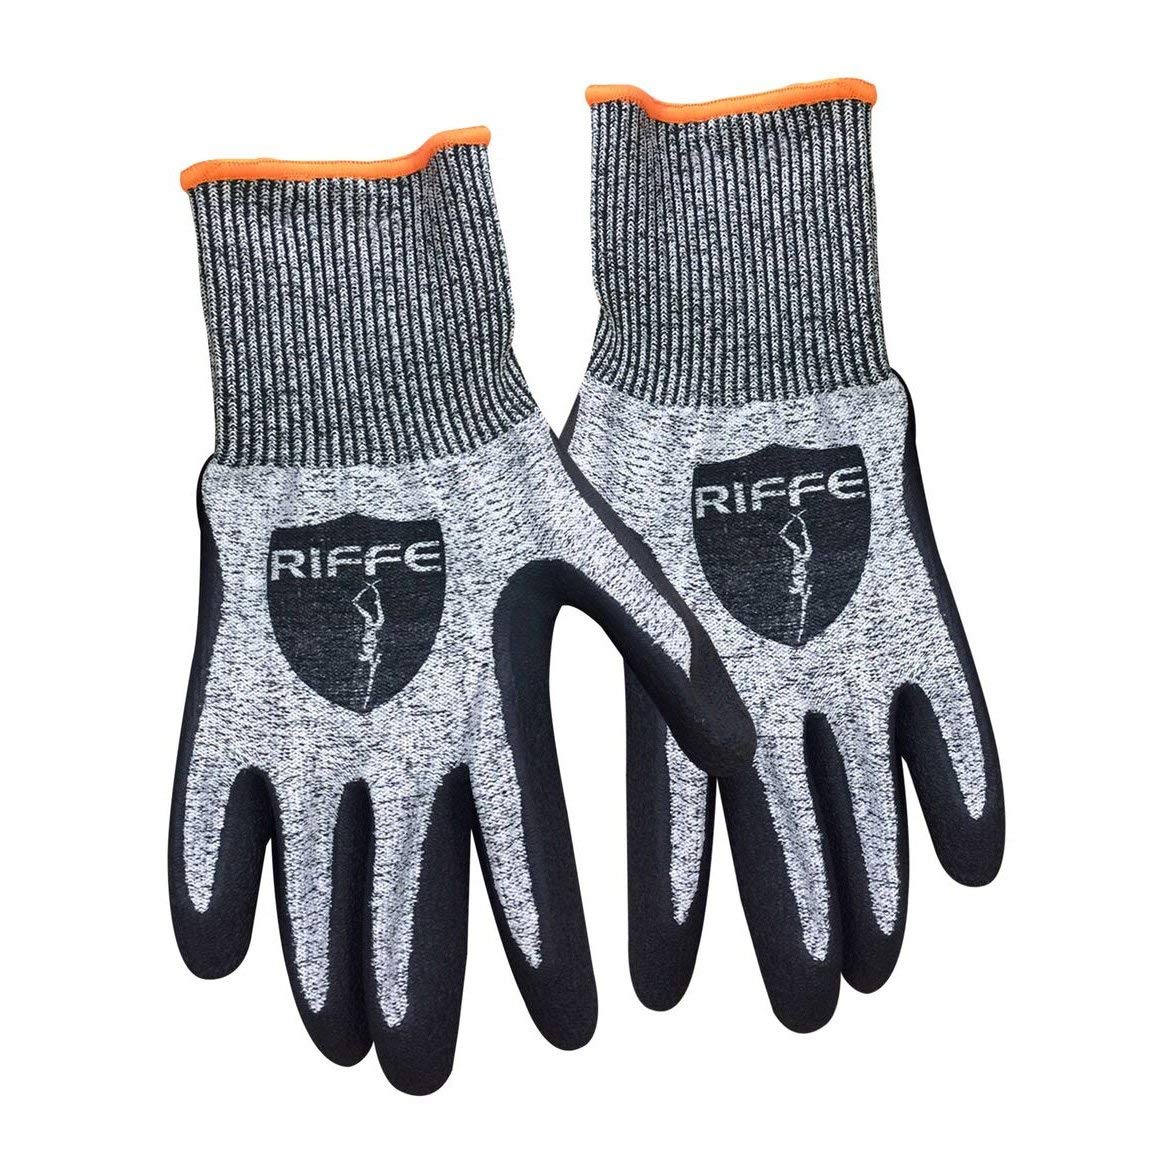 Riffe Holdfast Cut Resistant Gloves - Medium